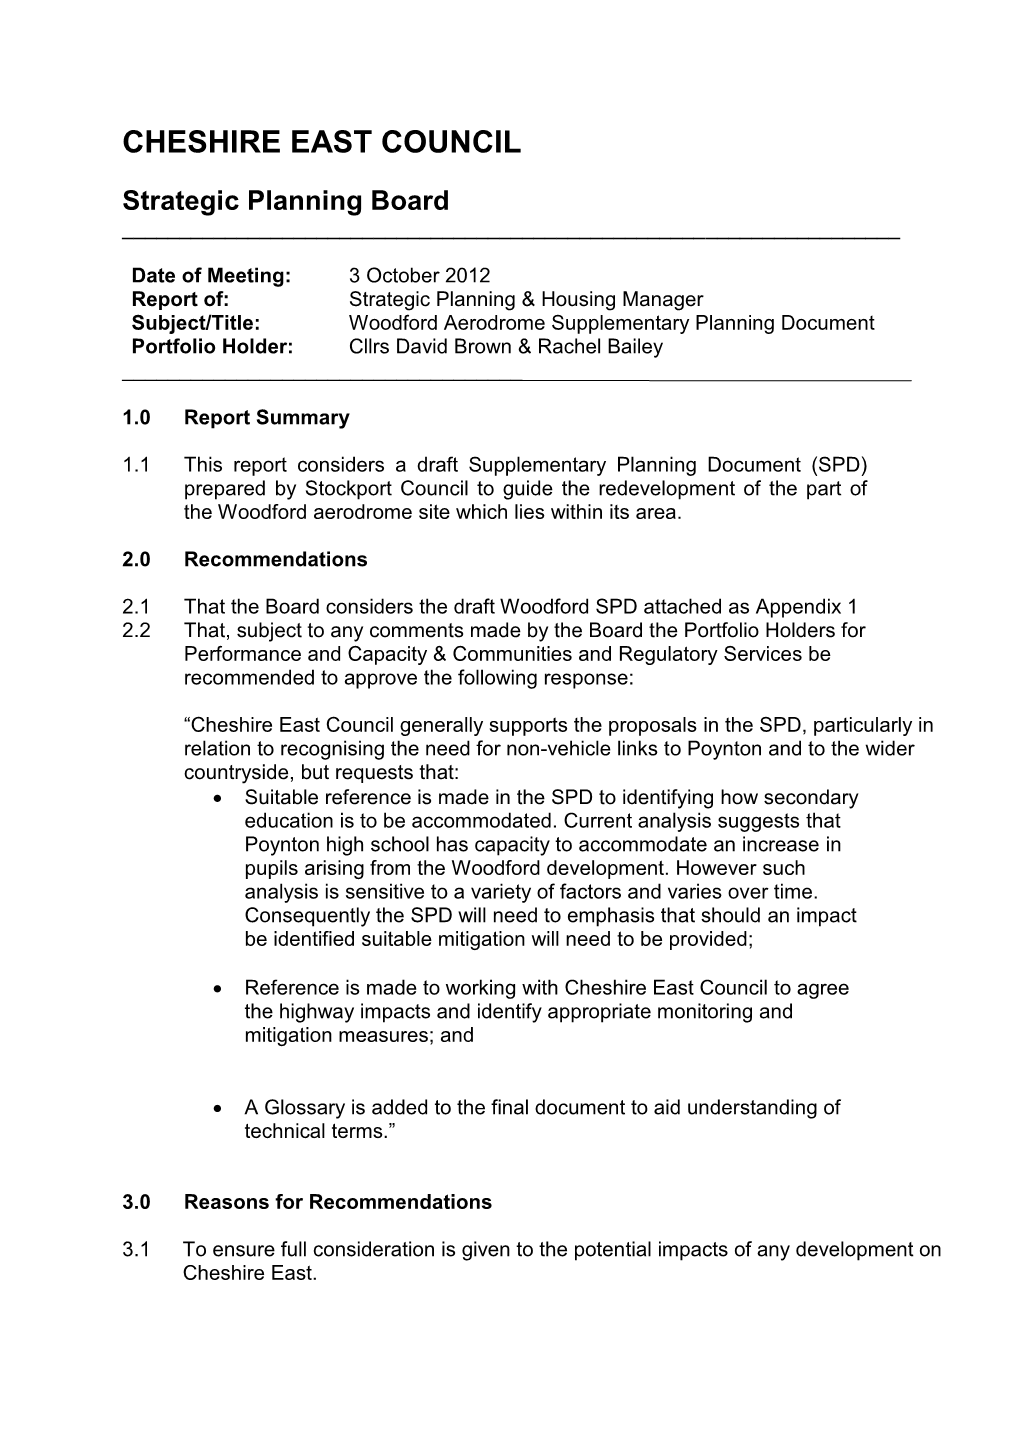 Woodford Aerodrome Supplementary Planning Document PDF 90 KB